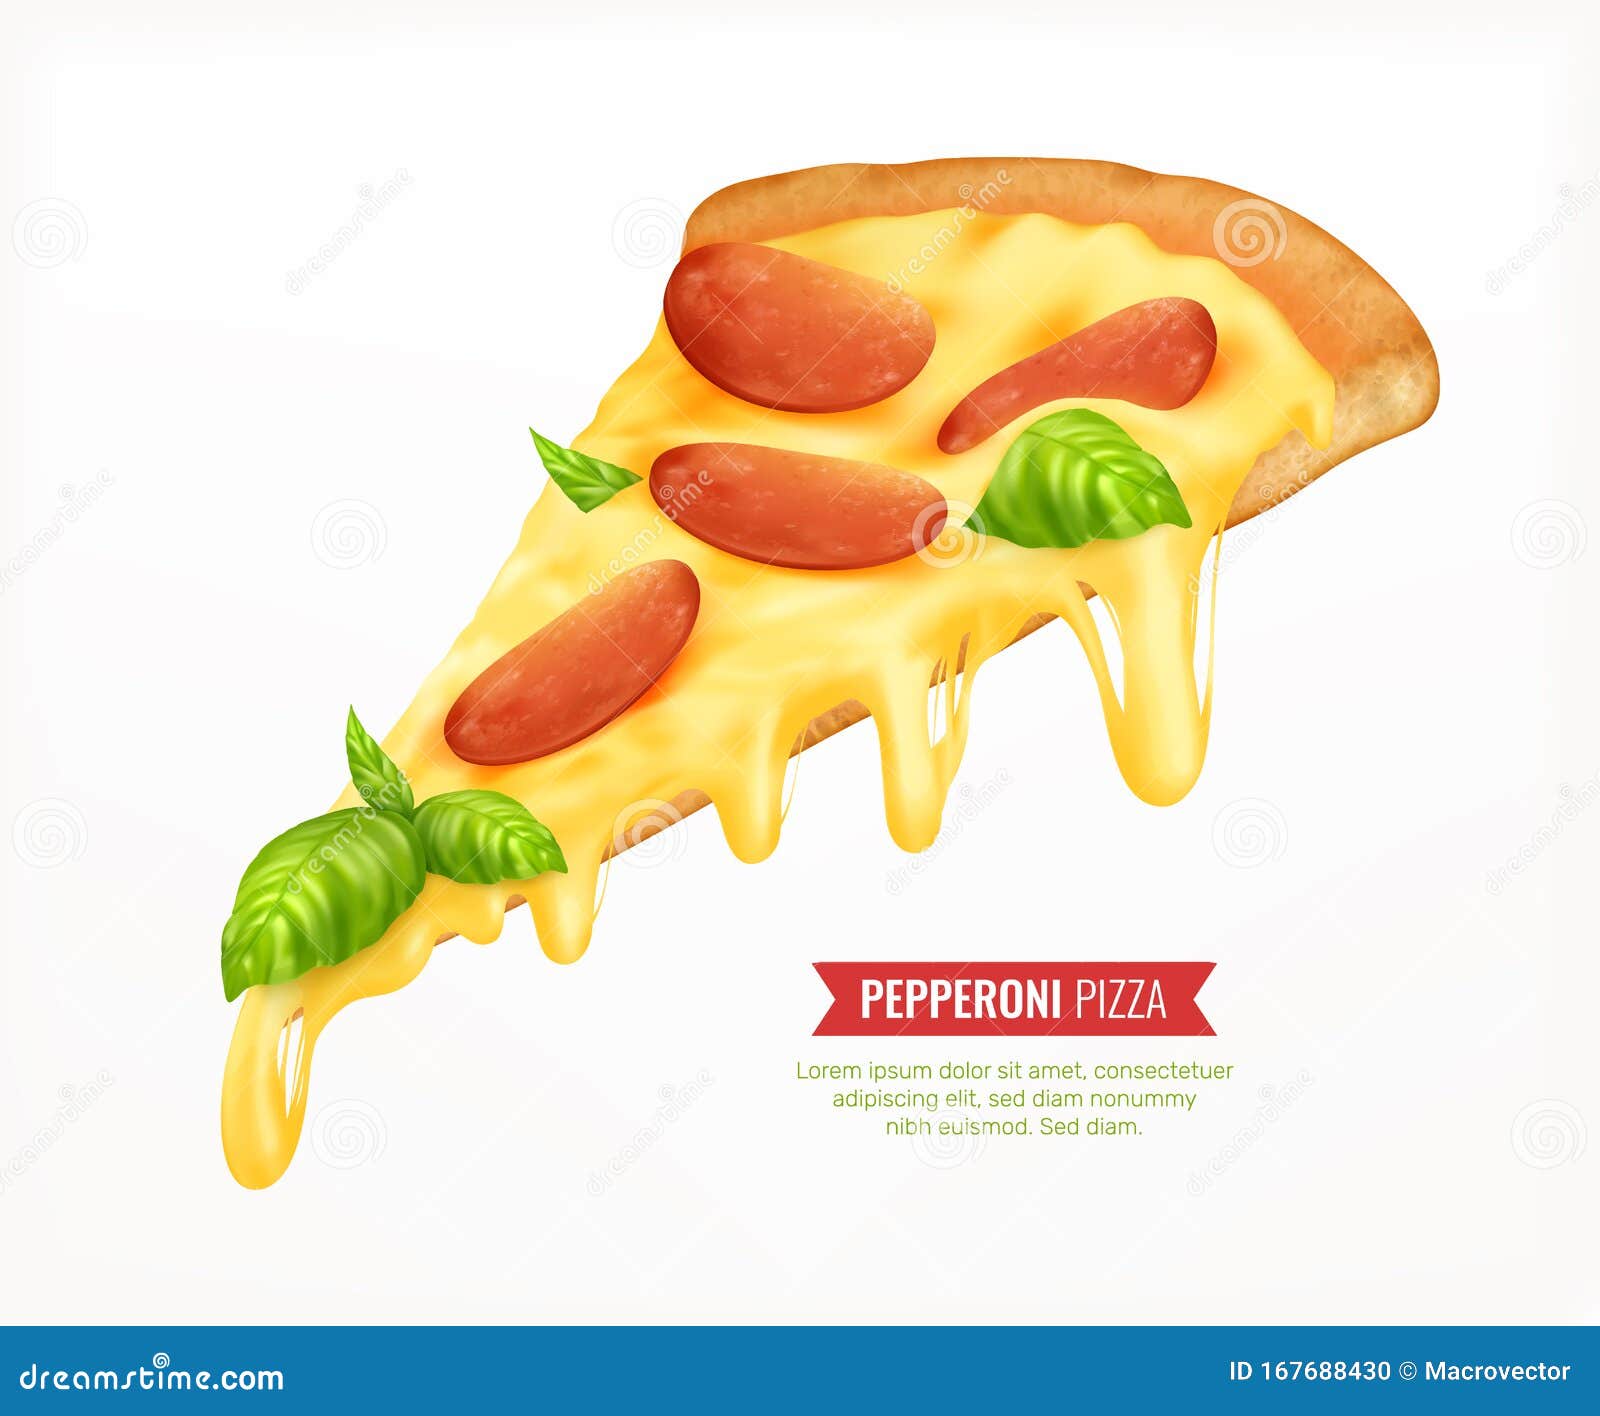 12,892 Pizza Slice Sketch Images, Stock Photos & Vectors | Shutterstock